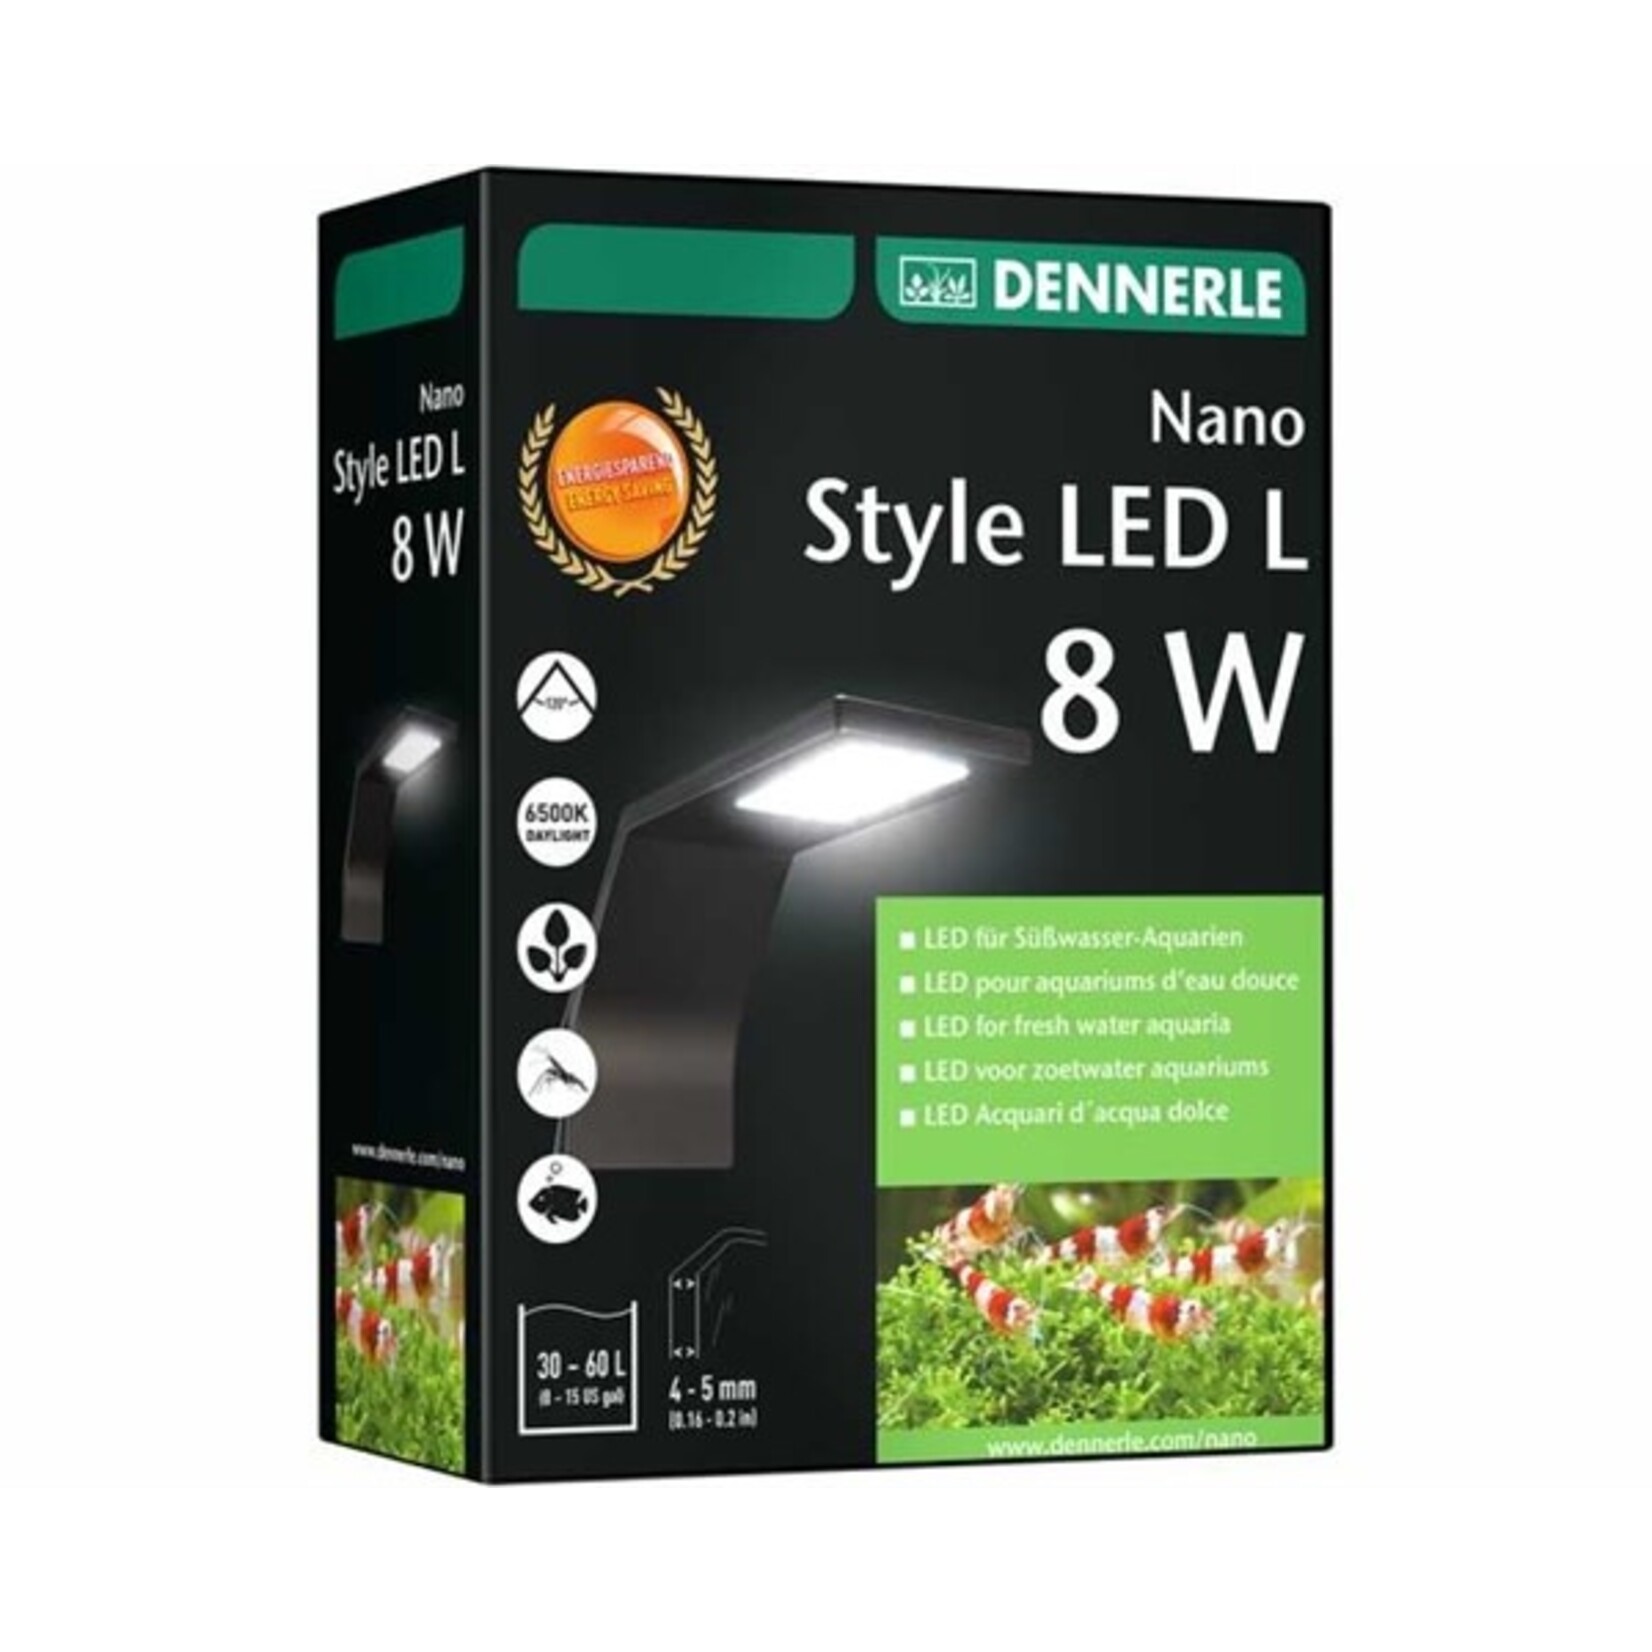 Dennerle Nano style LED l - 8 w